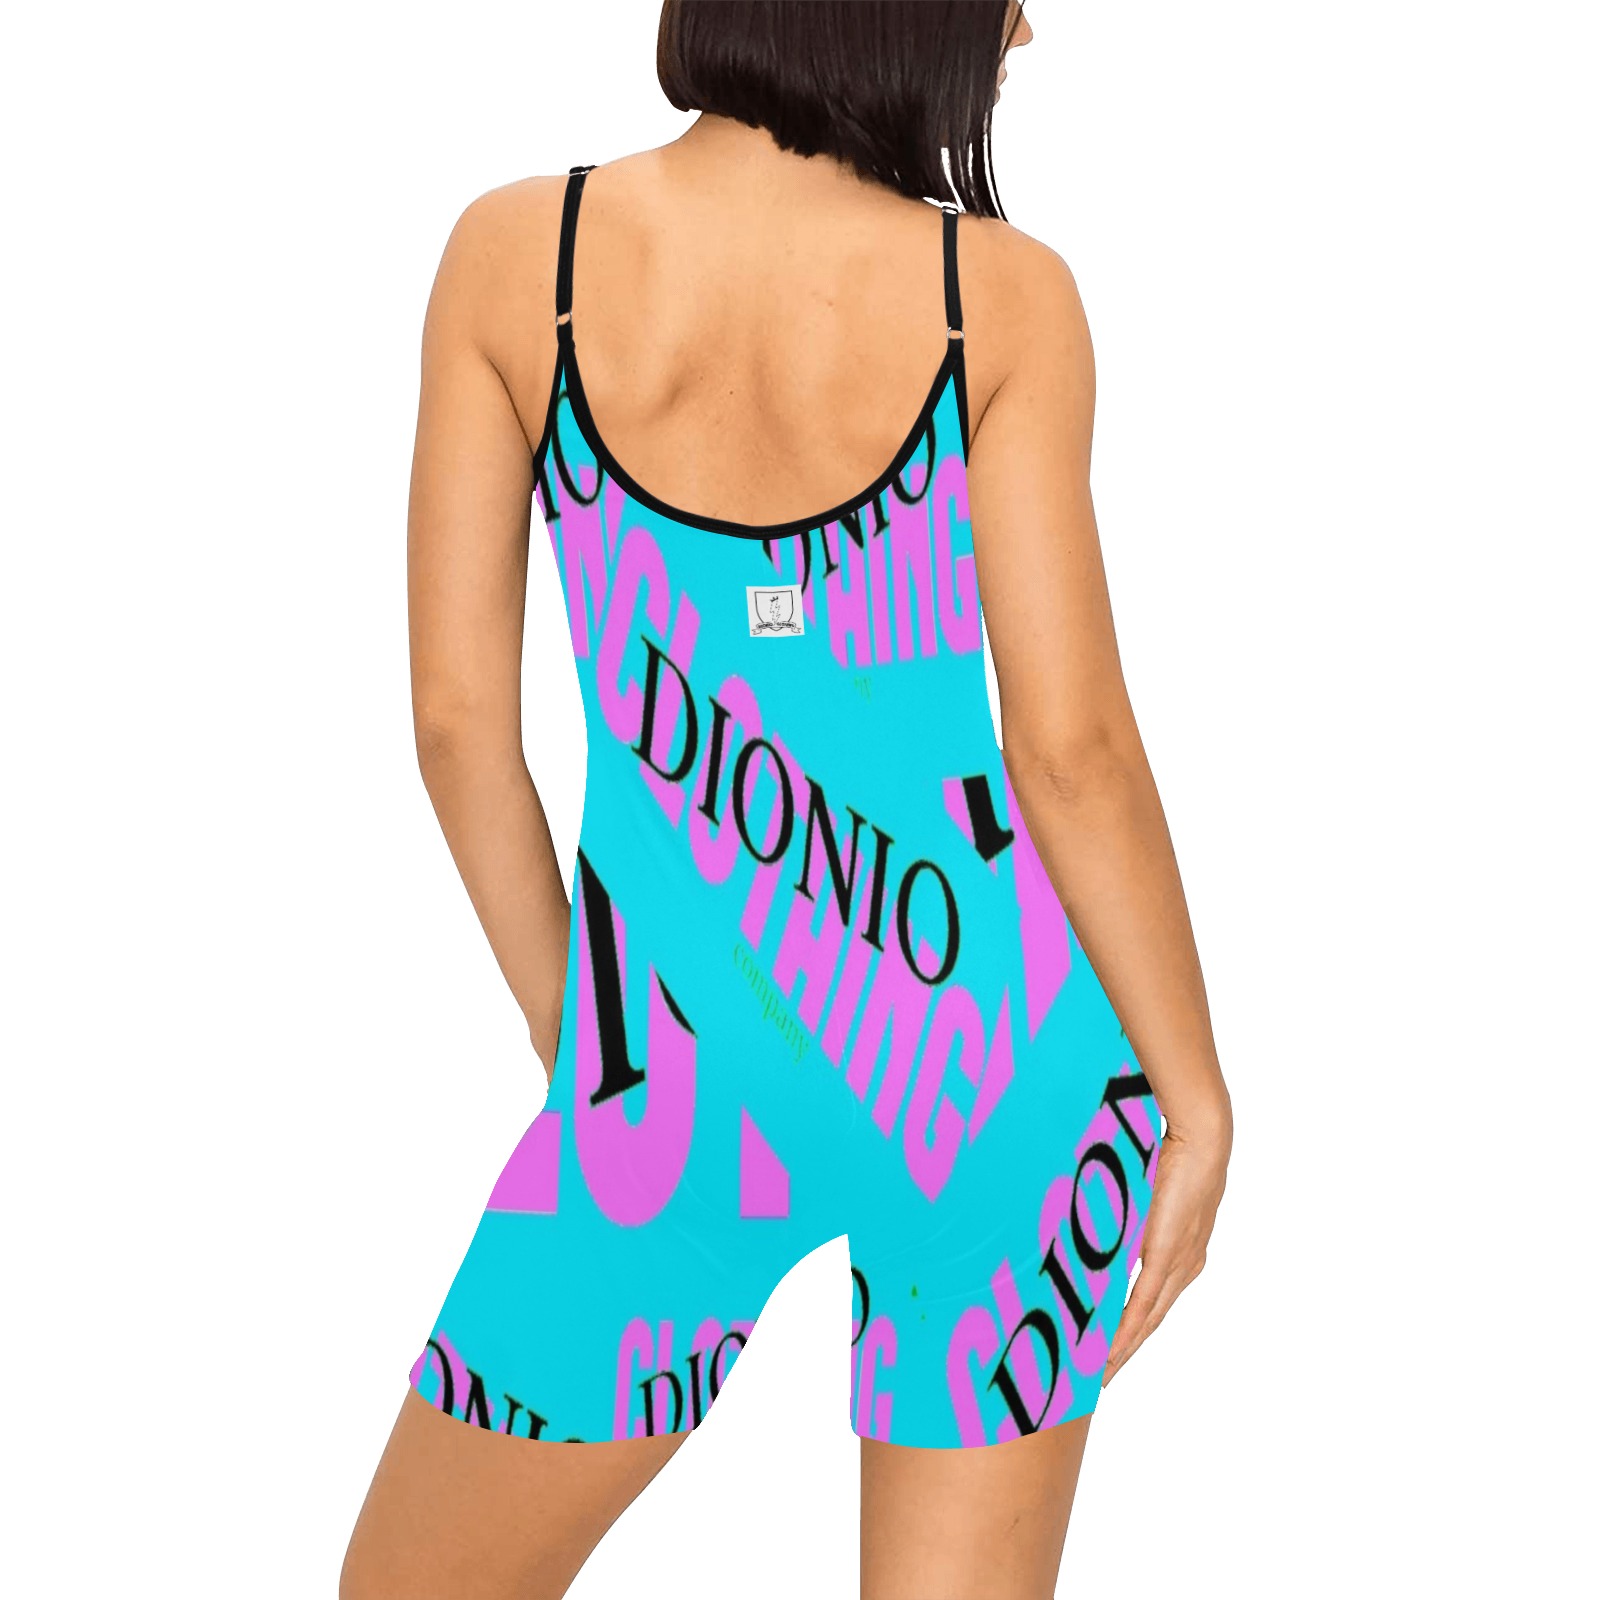 DIONIO Clothing - Women's Short Yoga Bodysuit (Company Turquoisr & Pink Logo) Women's Short Yoga Bodysuit